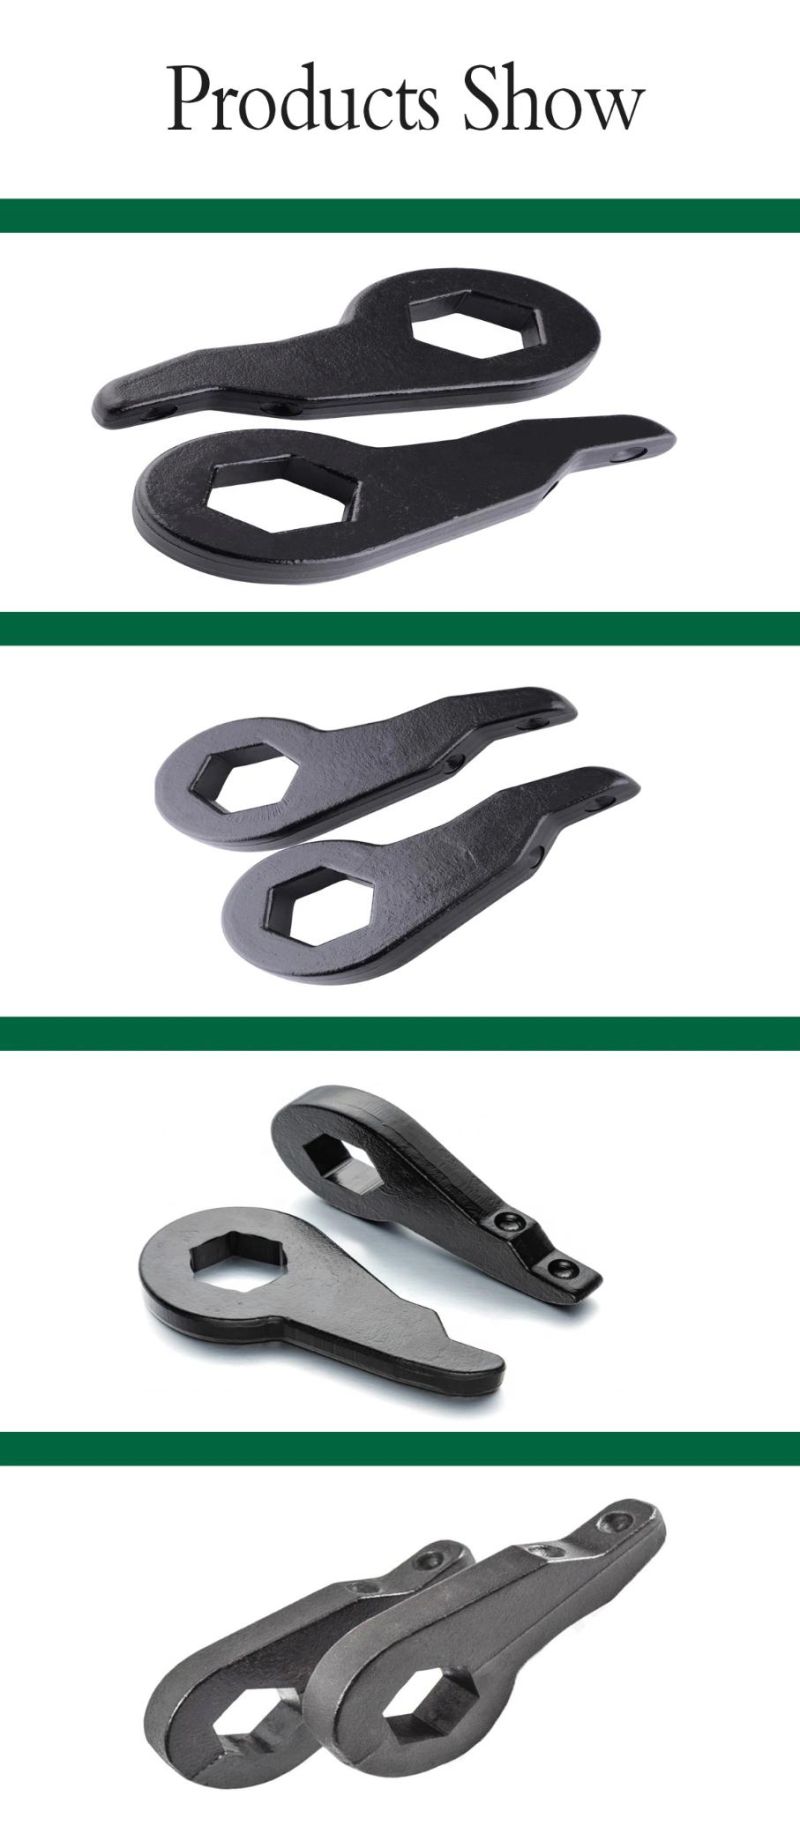 Customized Forging Torsion Bar Key Suspension Lift Kits for Car Lifts Truck Tires